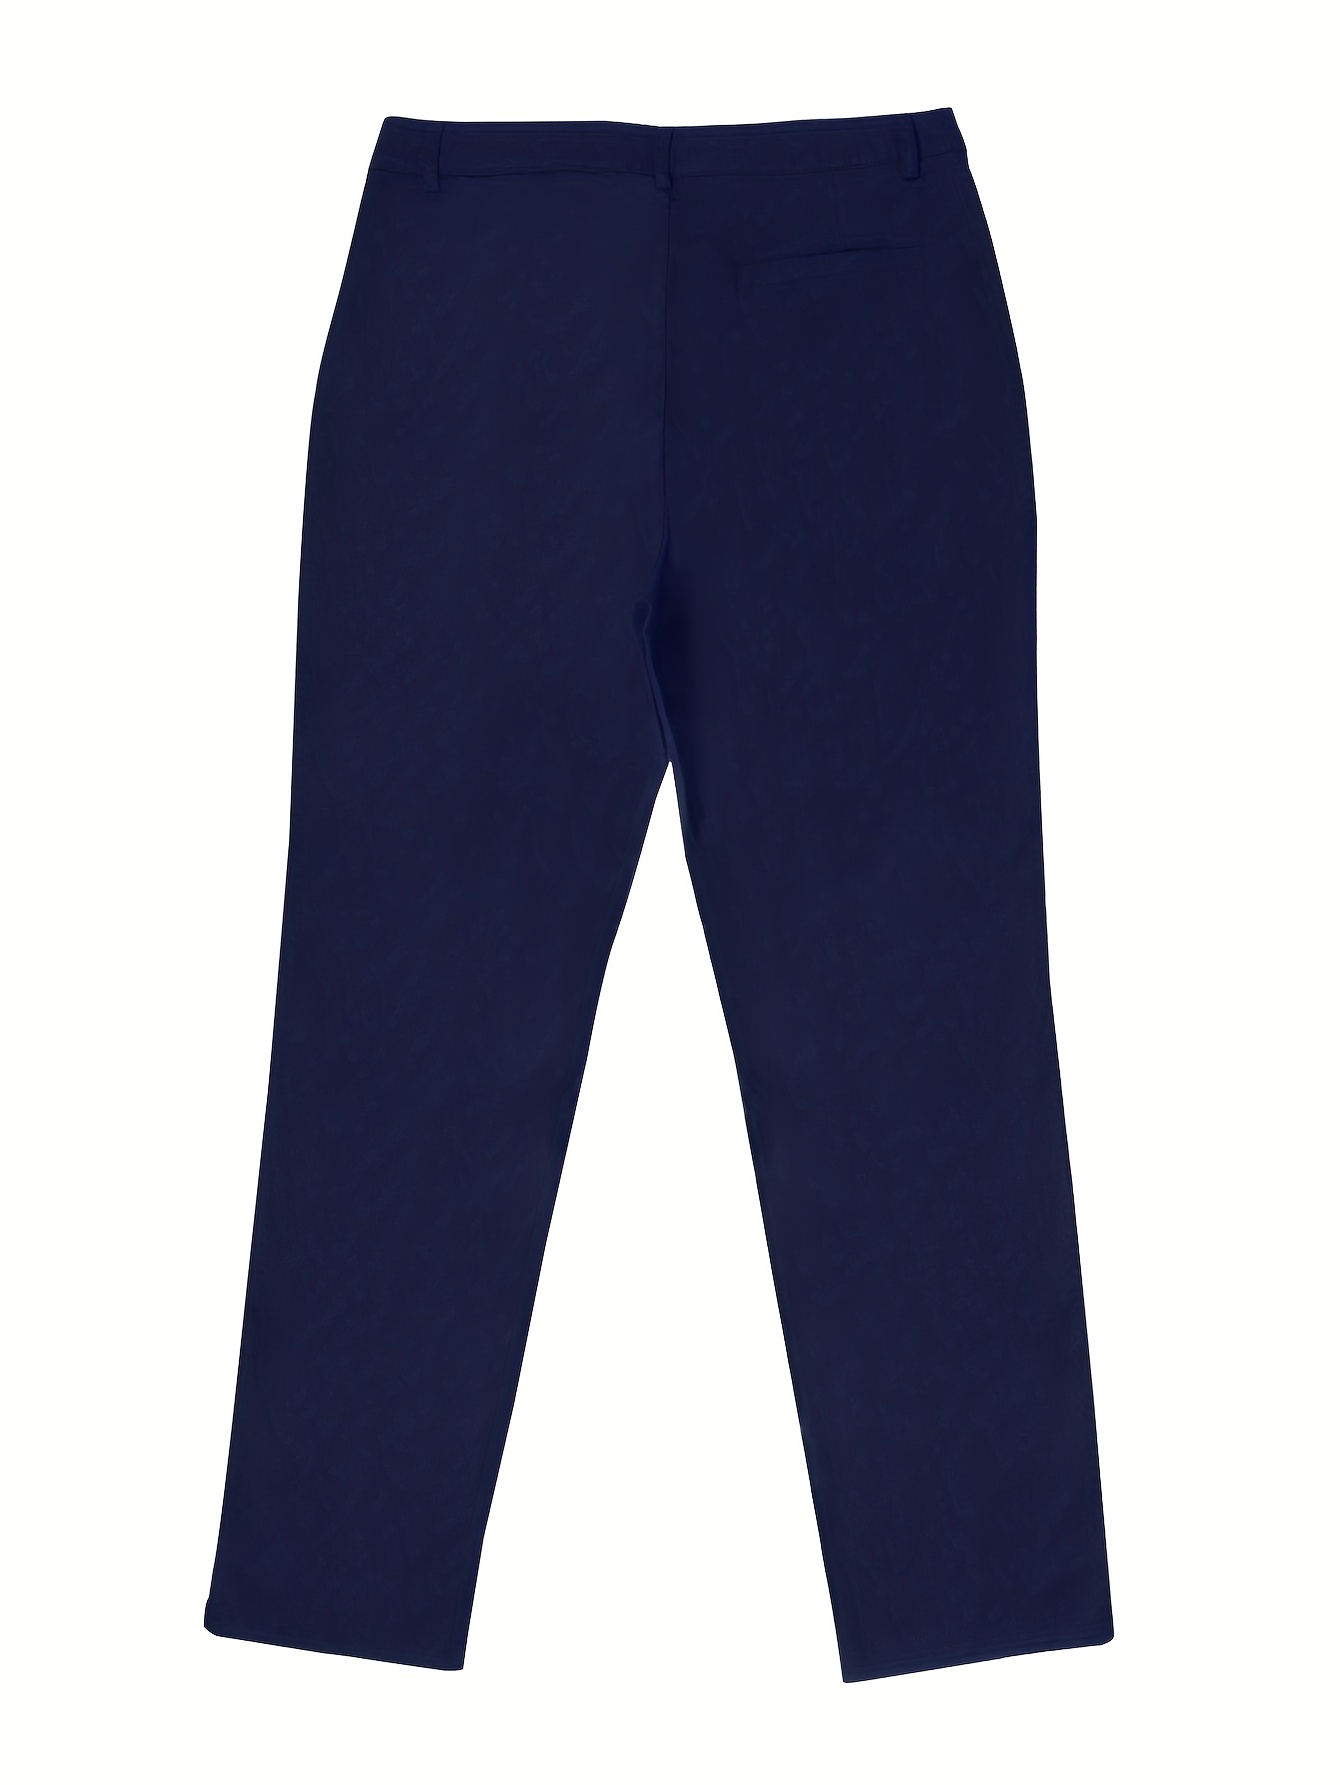 Classic Design Stretch Dress Pants, Men's Semi-formal Solid Color Slim Fit  Slightly Stretch Dress Pants For Business